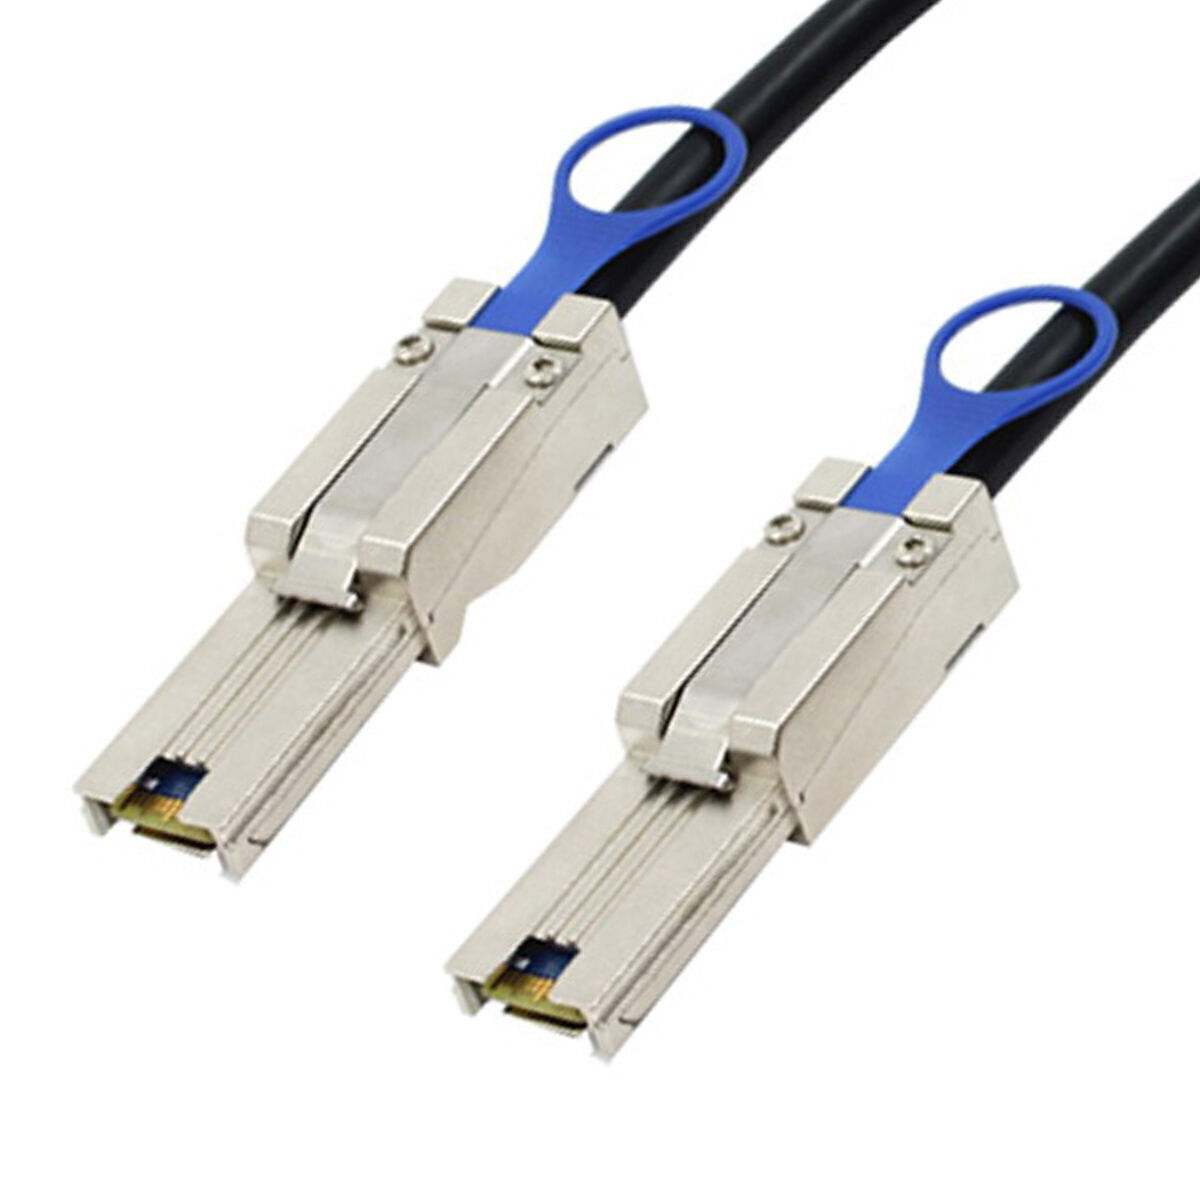 Cablecy External Mini SAS 4x SFF-8088 to SFF 8088 data Raid Hard Disk SAS Cable